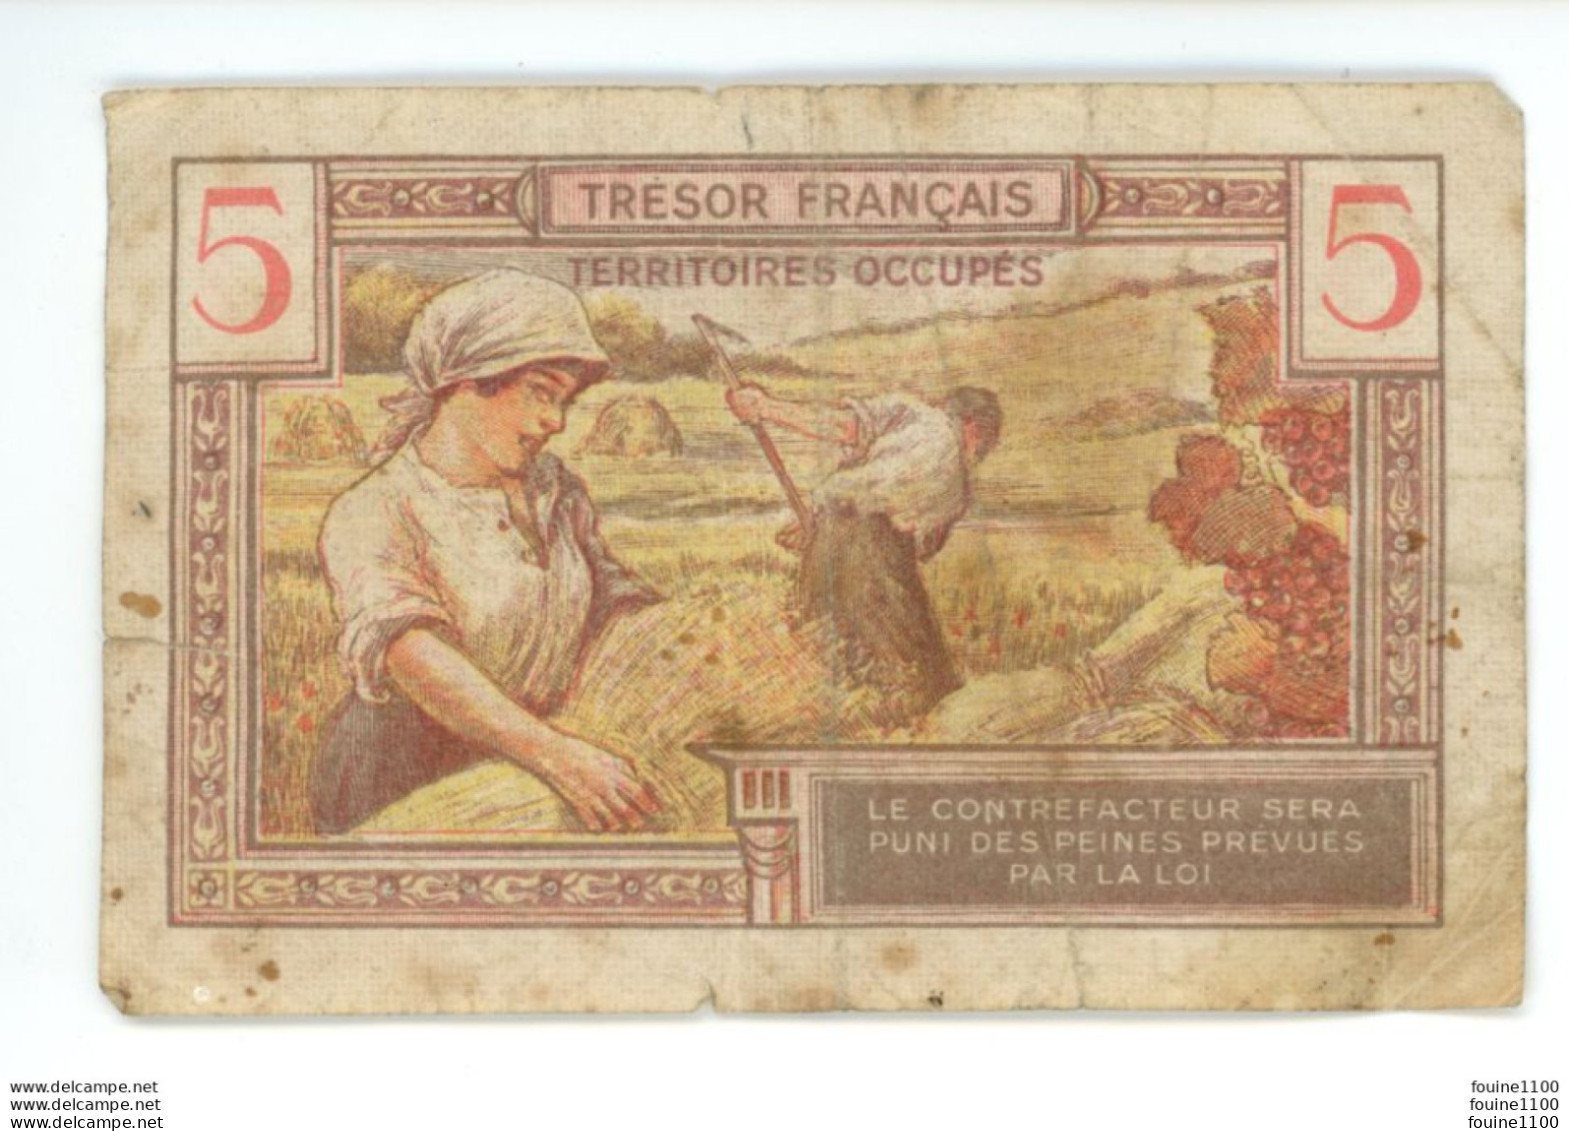 Billet , FRANCE , 5 Francs , Cinq , TRESOR FRANCAIS , Territoires Occupés - 1947 Staatskasse Frankreich